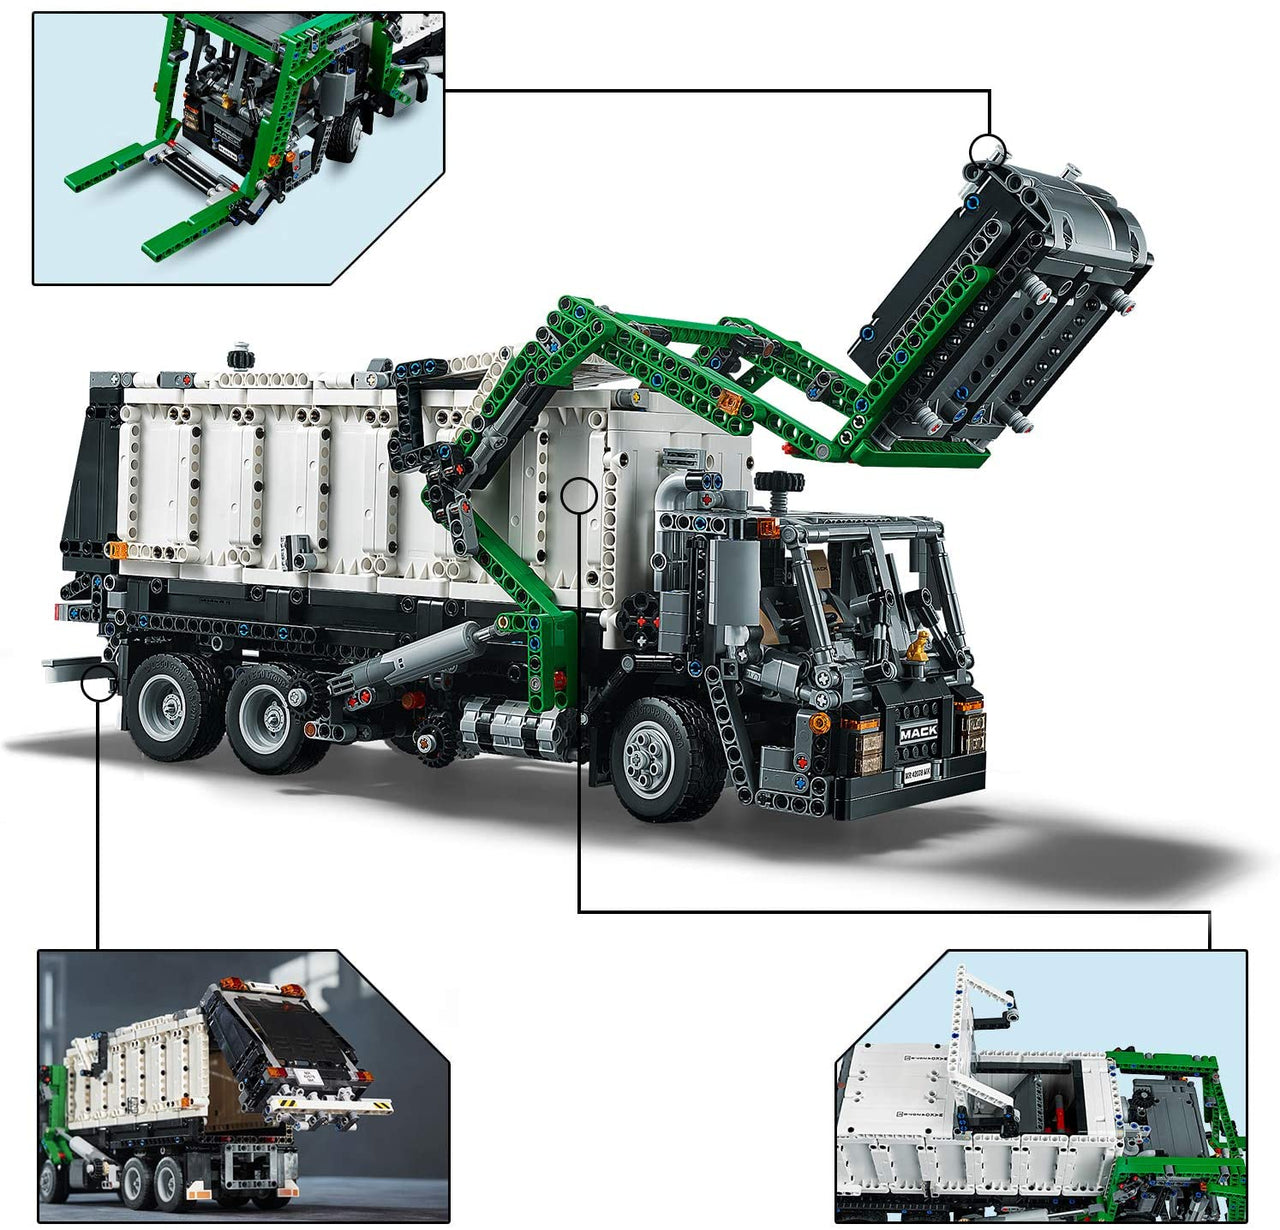 42078 LEGO Technic Camión Mack Anthem + Container 2 en 1 (2,595 Pieces) (Modelo Descontinuado) - CAT SERVICE PERU S.A.C.